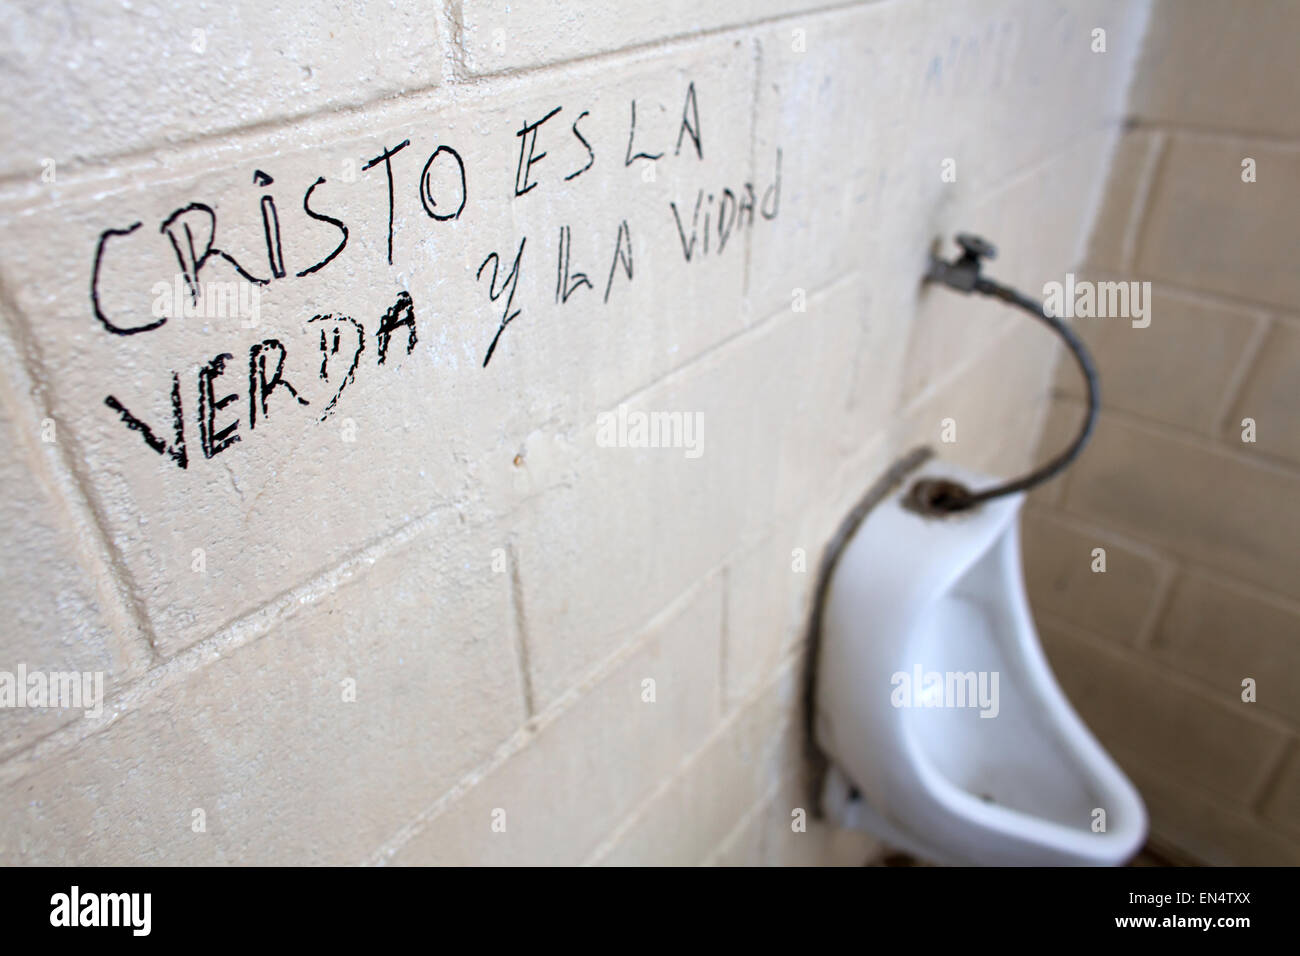 public toilet in nicaragua Stock Photo